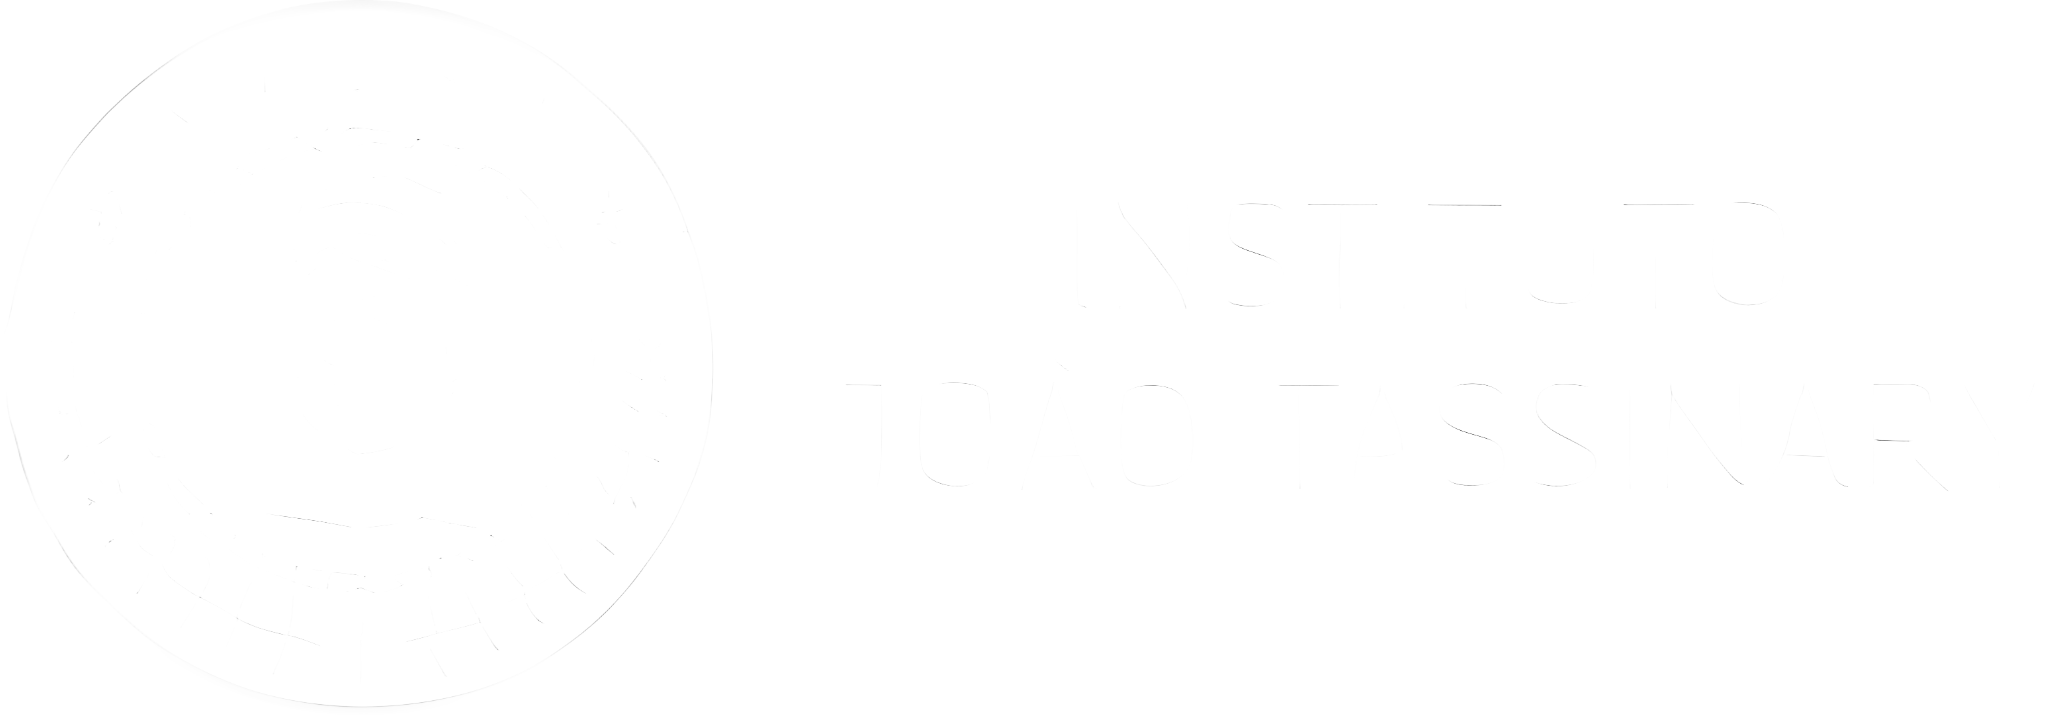 Instituto João Tassinary